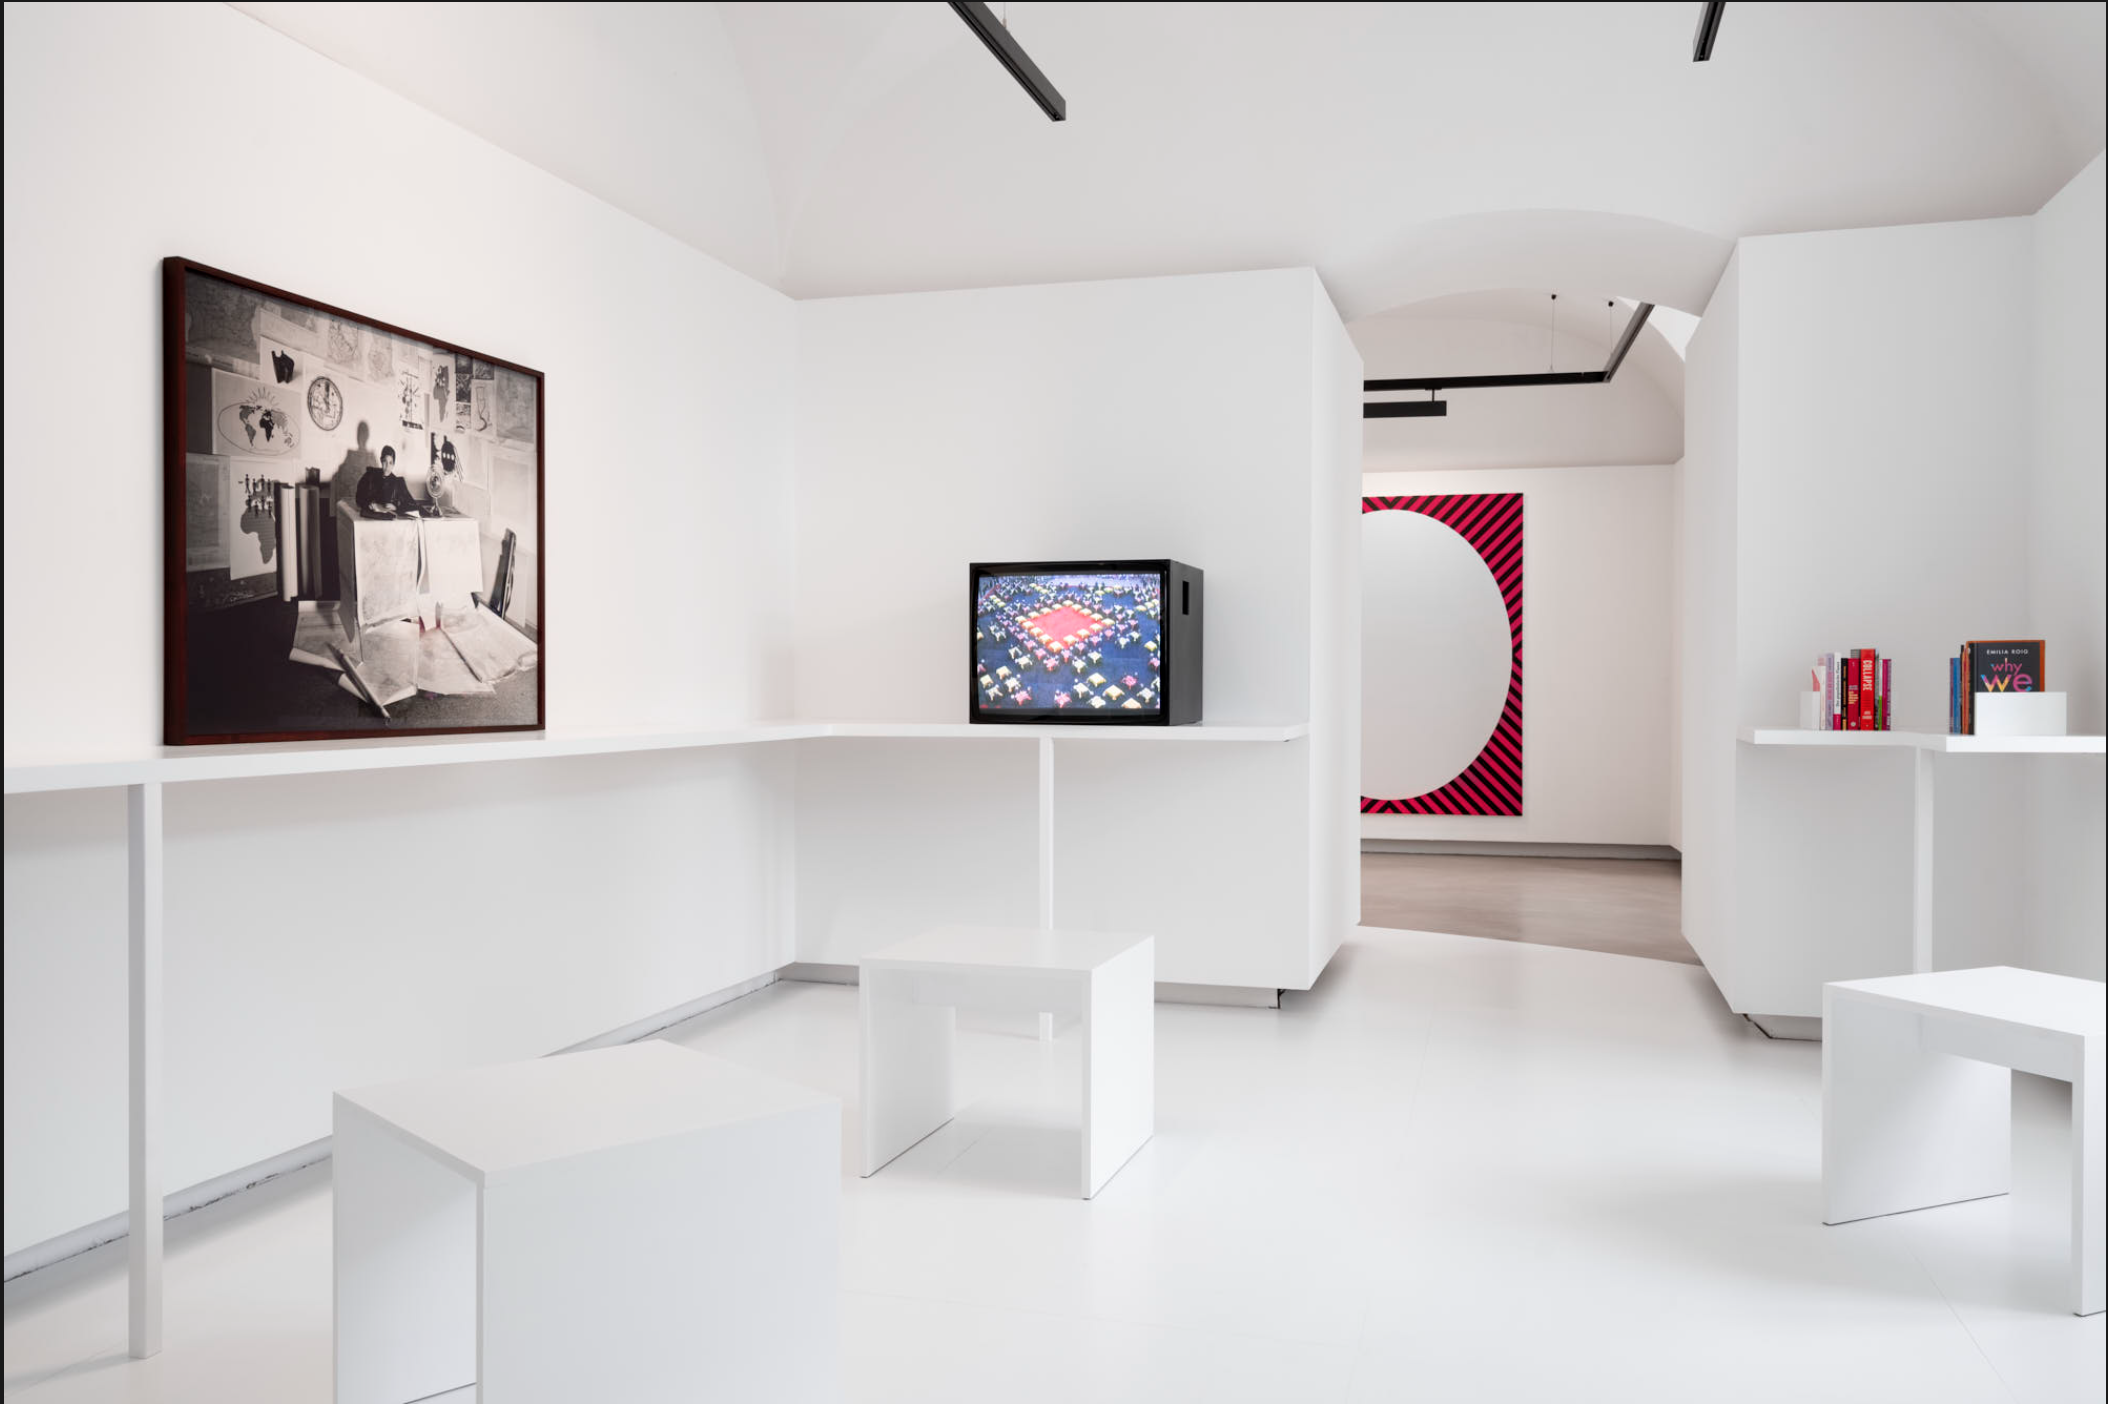 12/06/2021 - Heba Y. Amin, Neue Galerie’deki “Oval Office” sergisinde